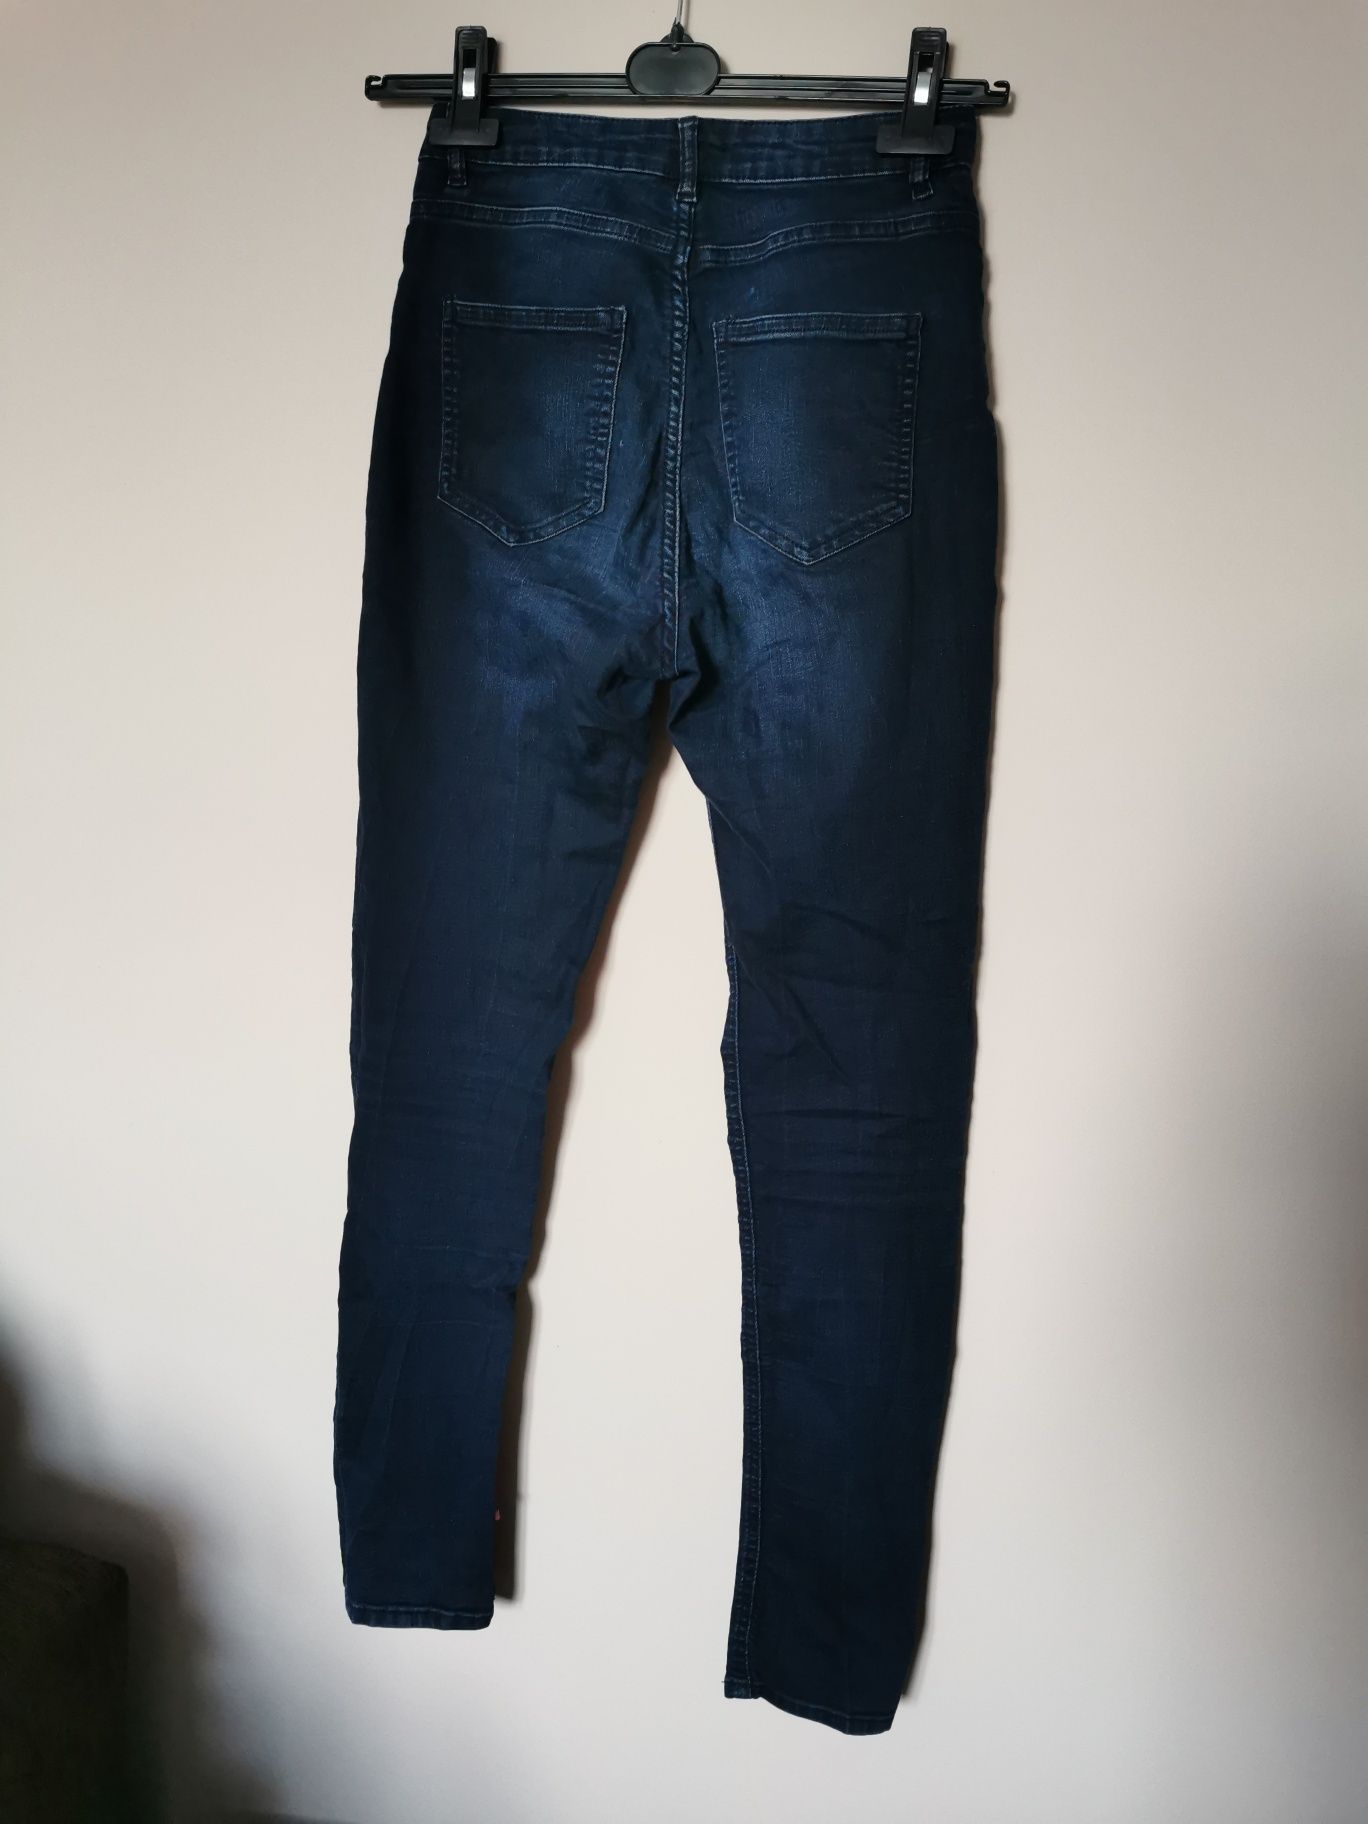 Jeansy dżinsy granatowe H&M wysoki stan skinny M 38 vintage boho